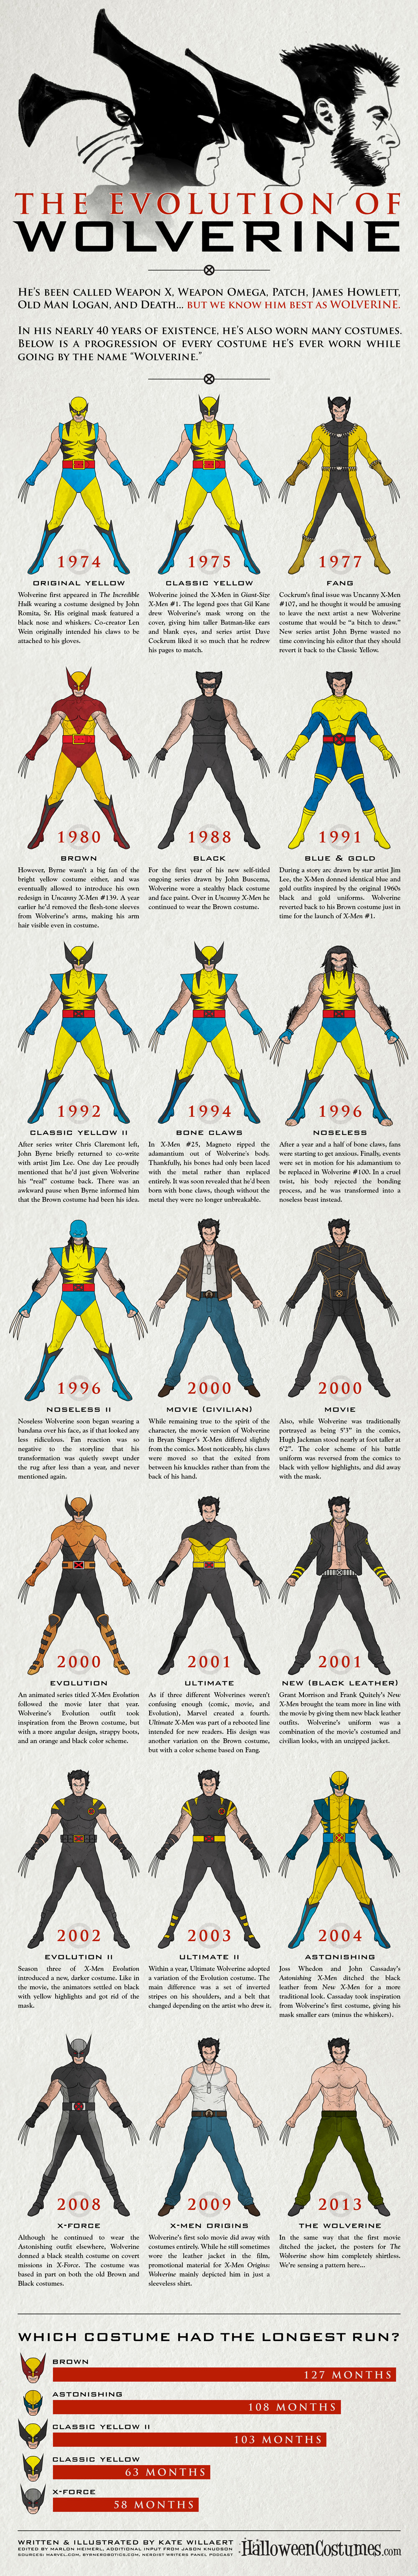 HalloweenCostumes.com: The Costume Evolution of Wolverine